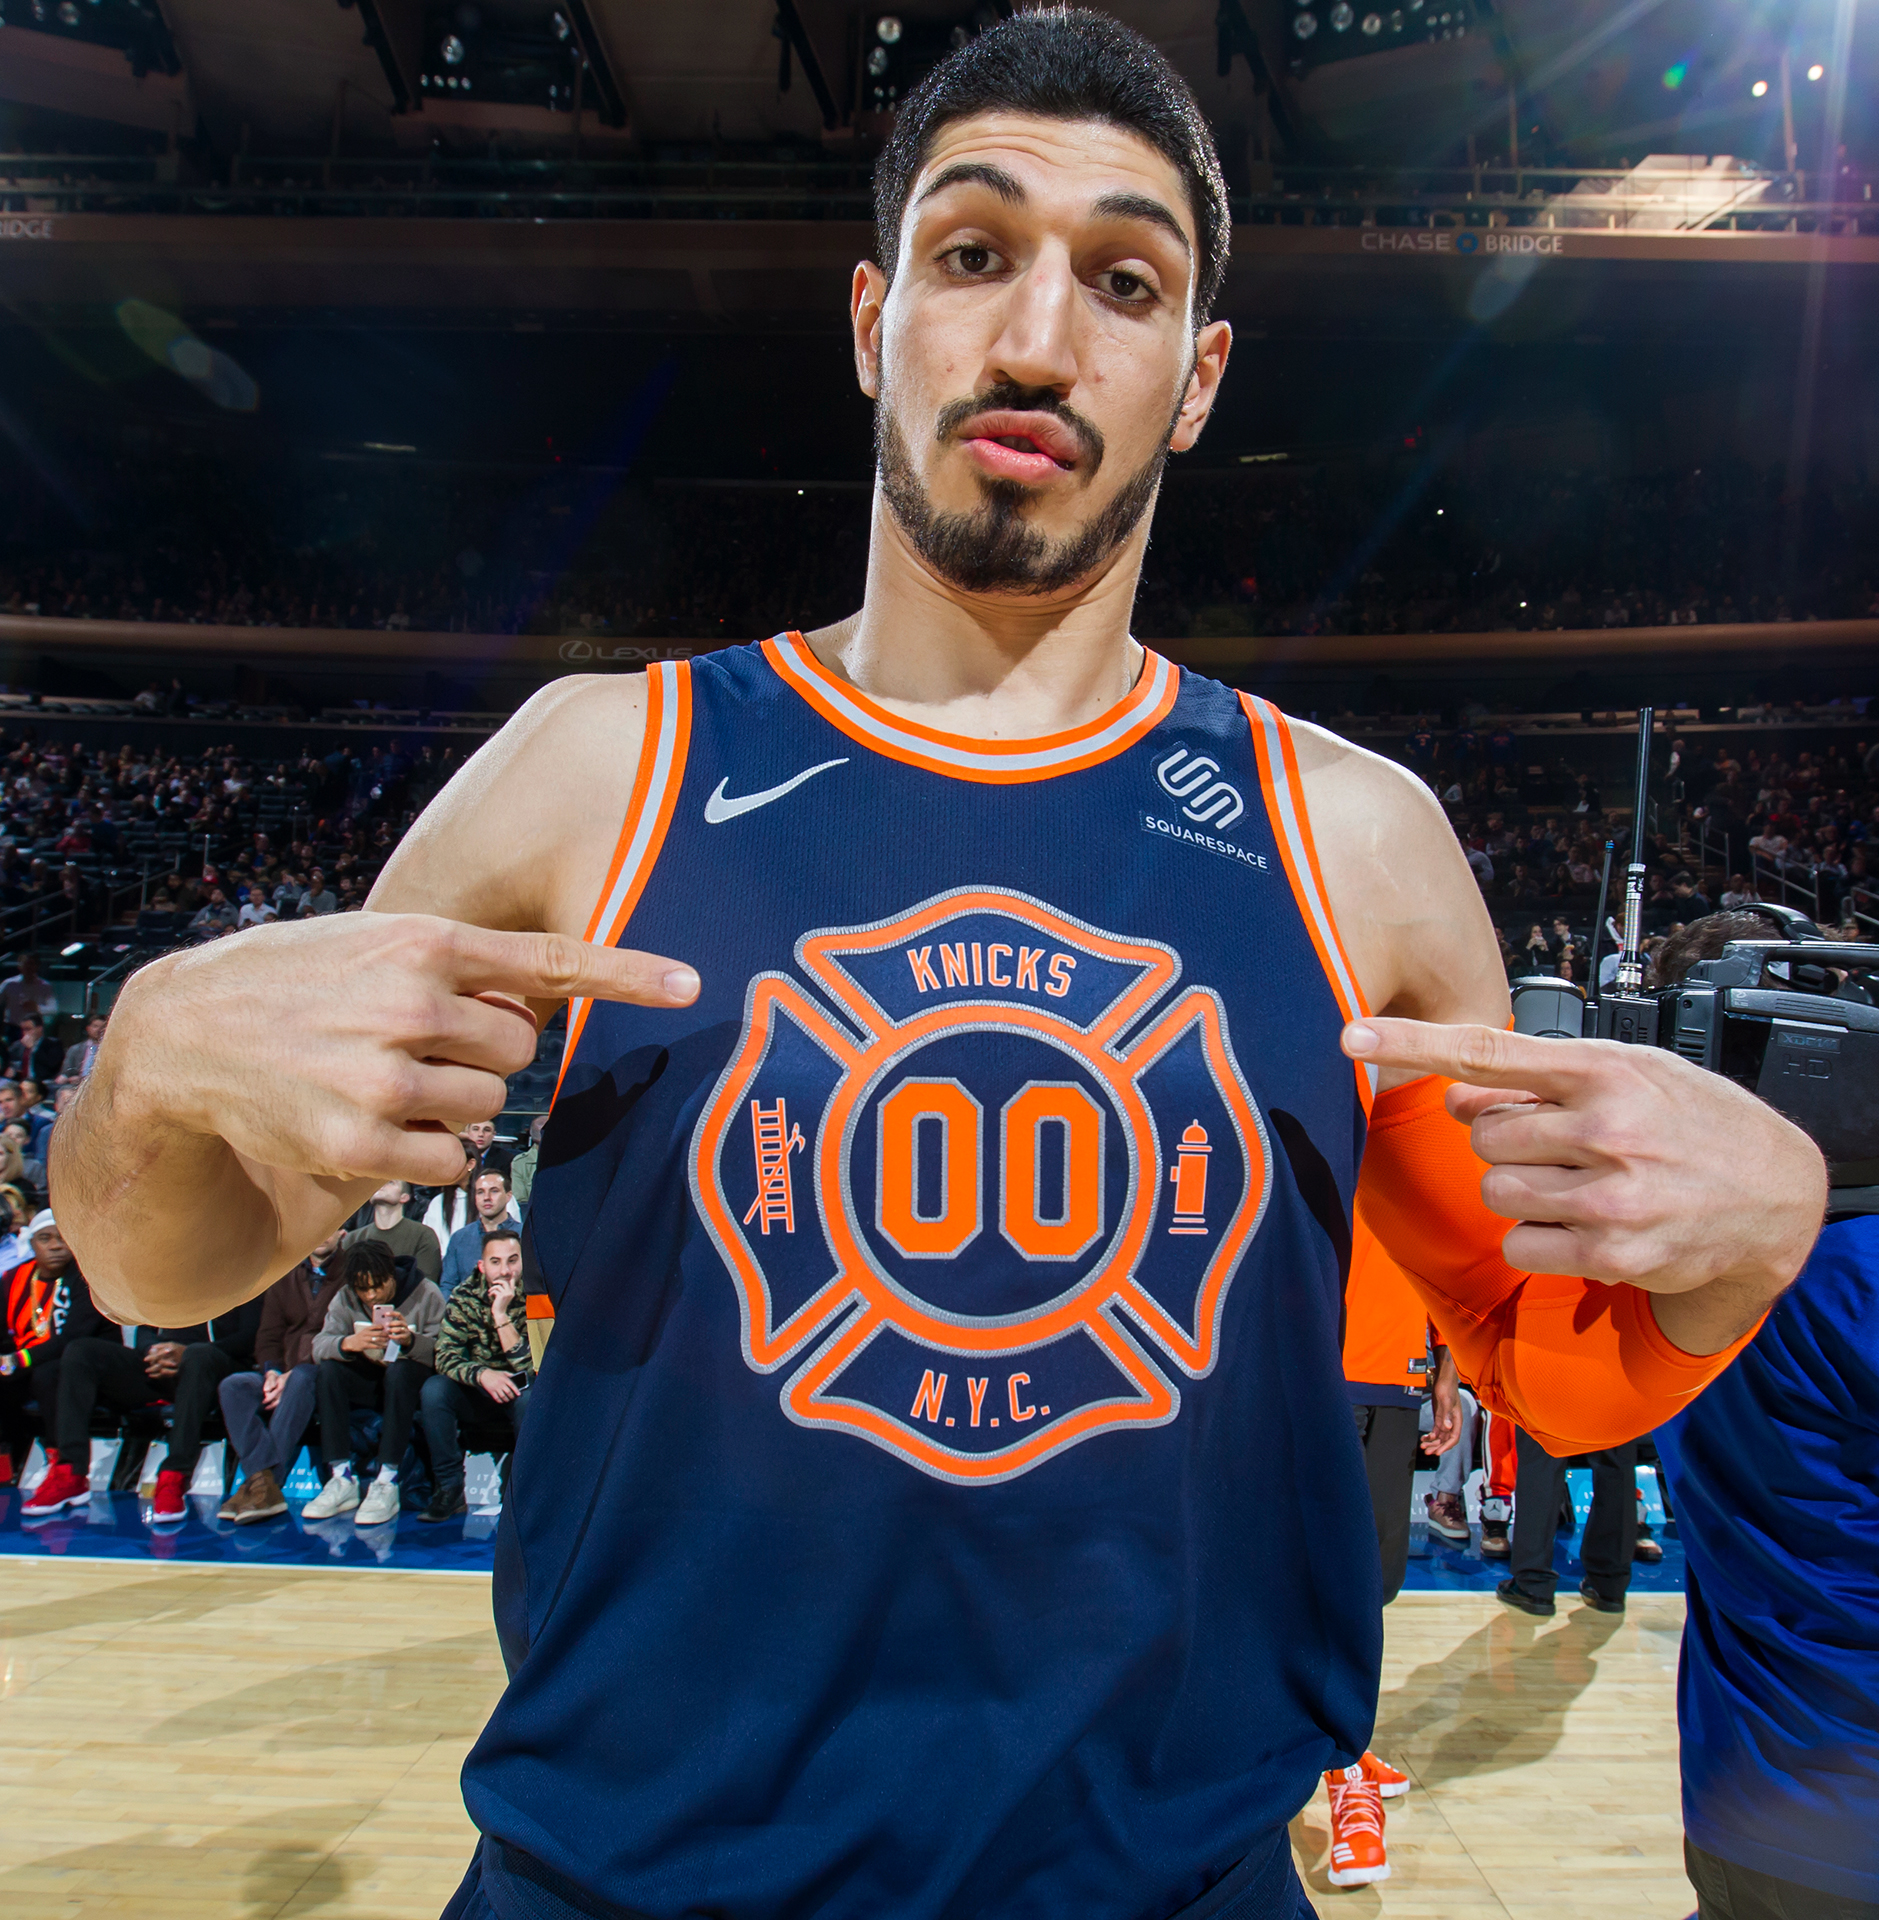 The Nicks team, Knicks City Edition